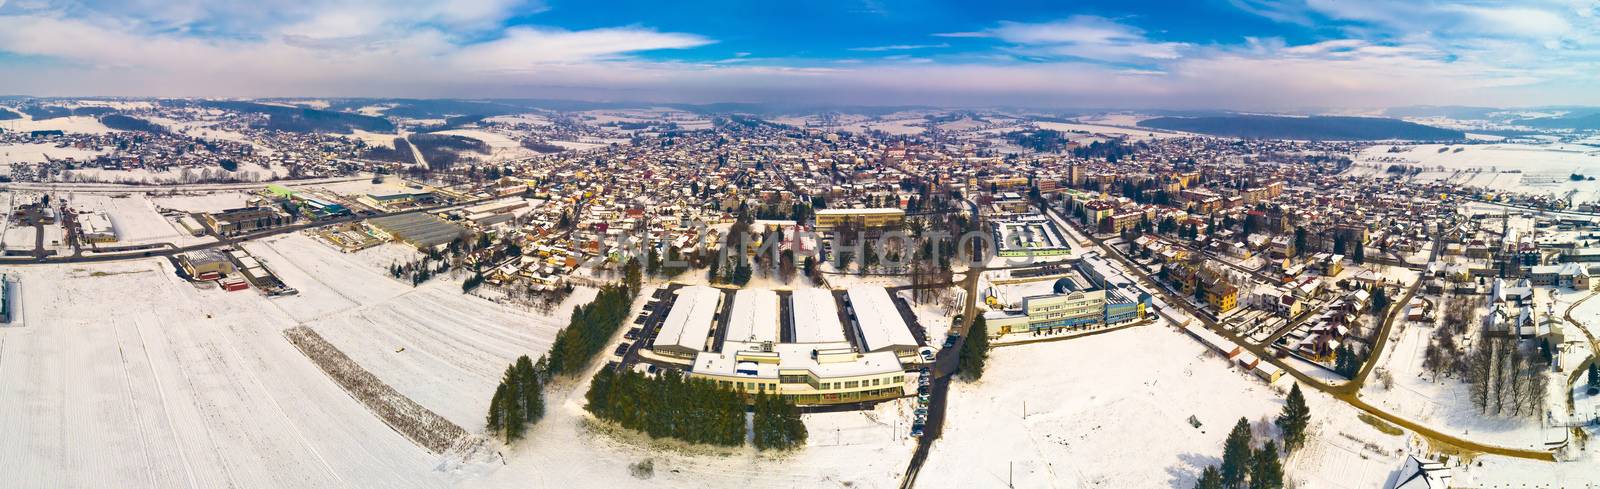 Aerial snowy winter view of Krizevci by xbrchx